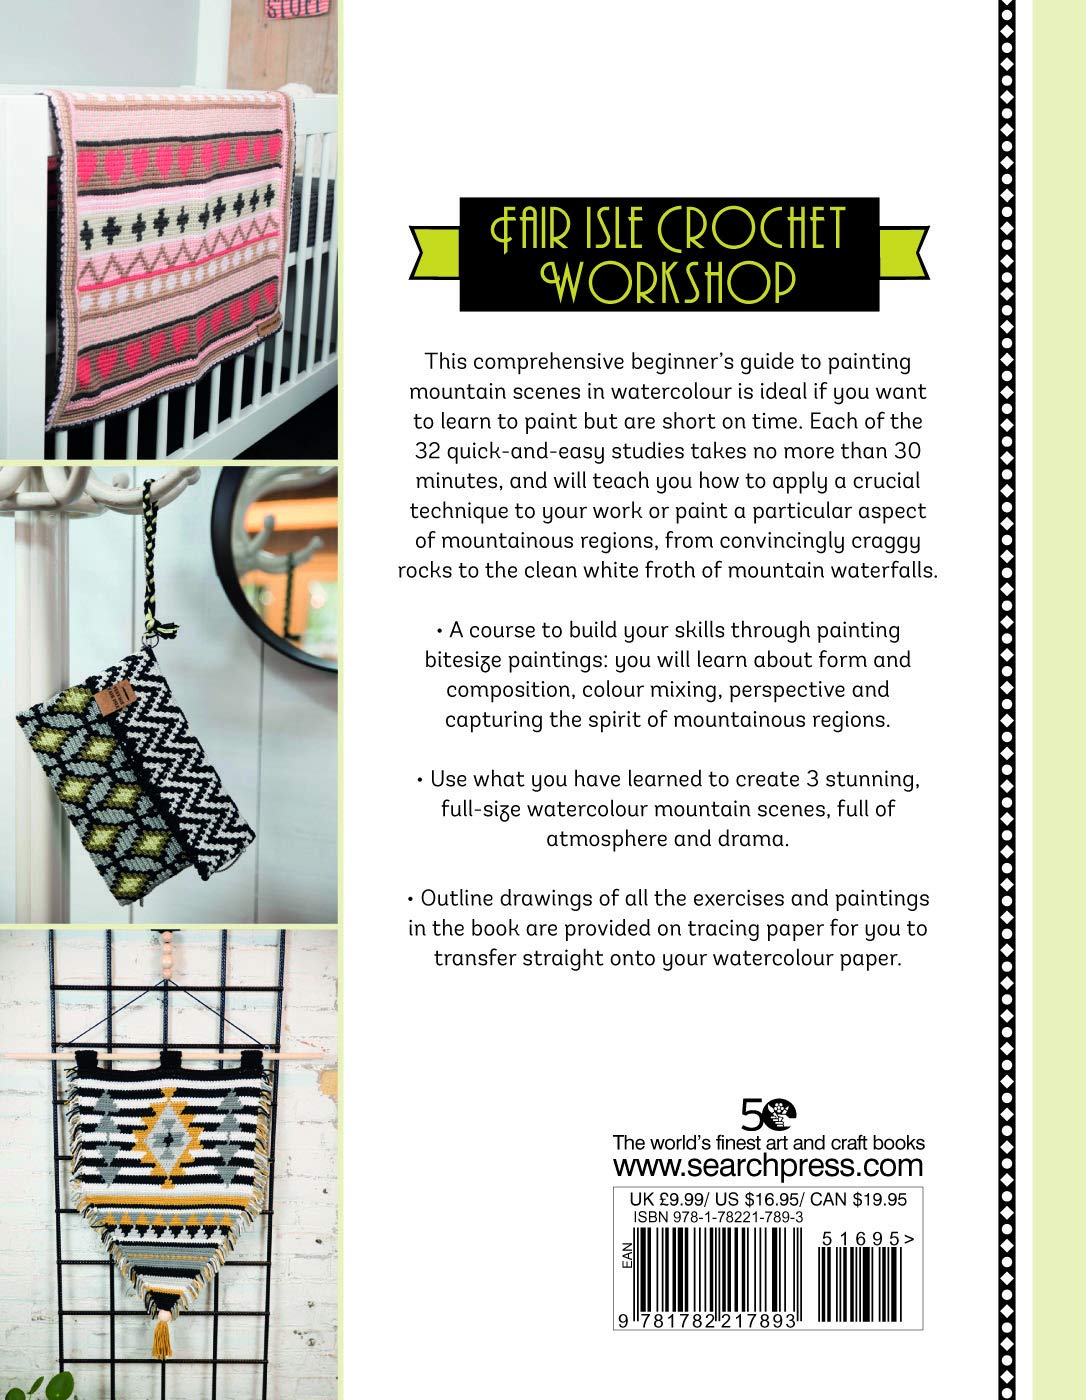 Fair Isle Crochet Workshop